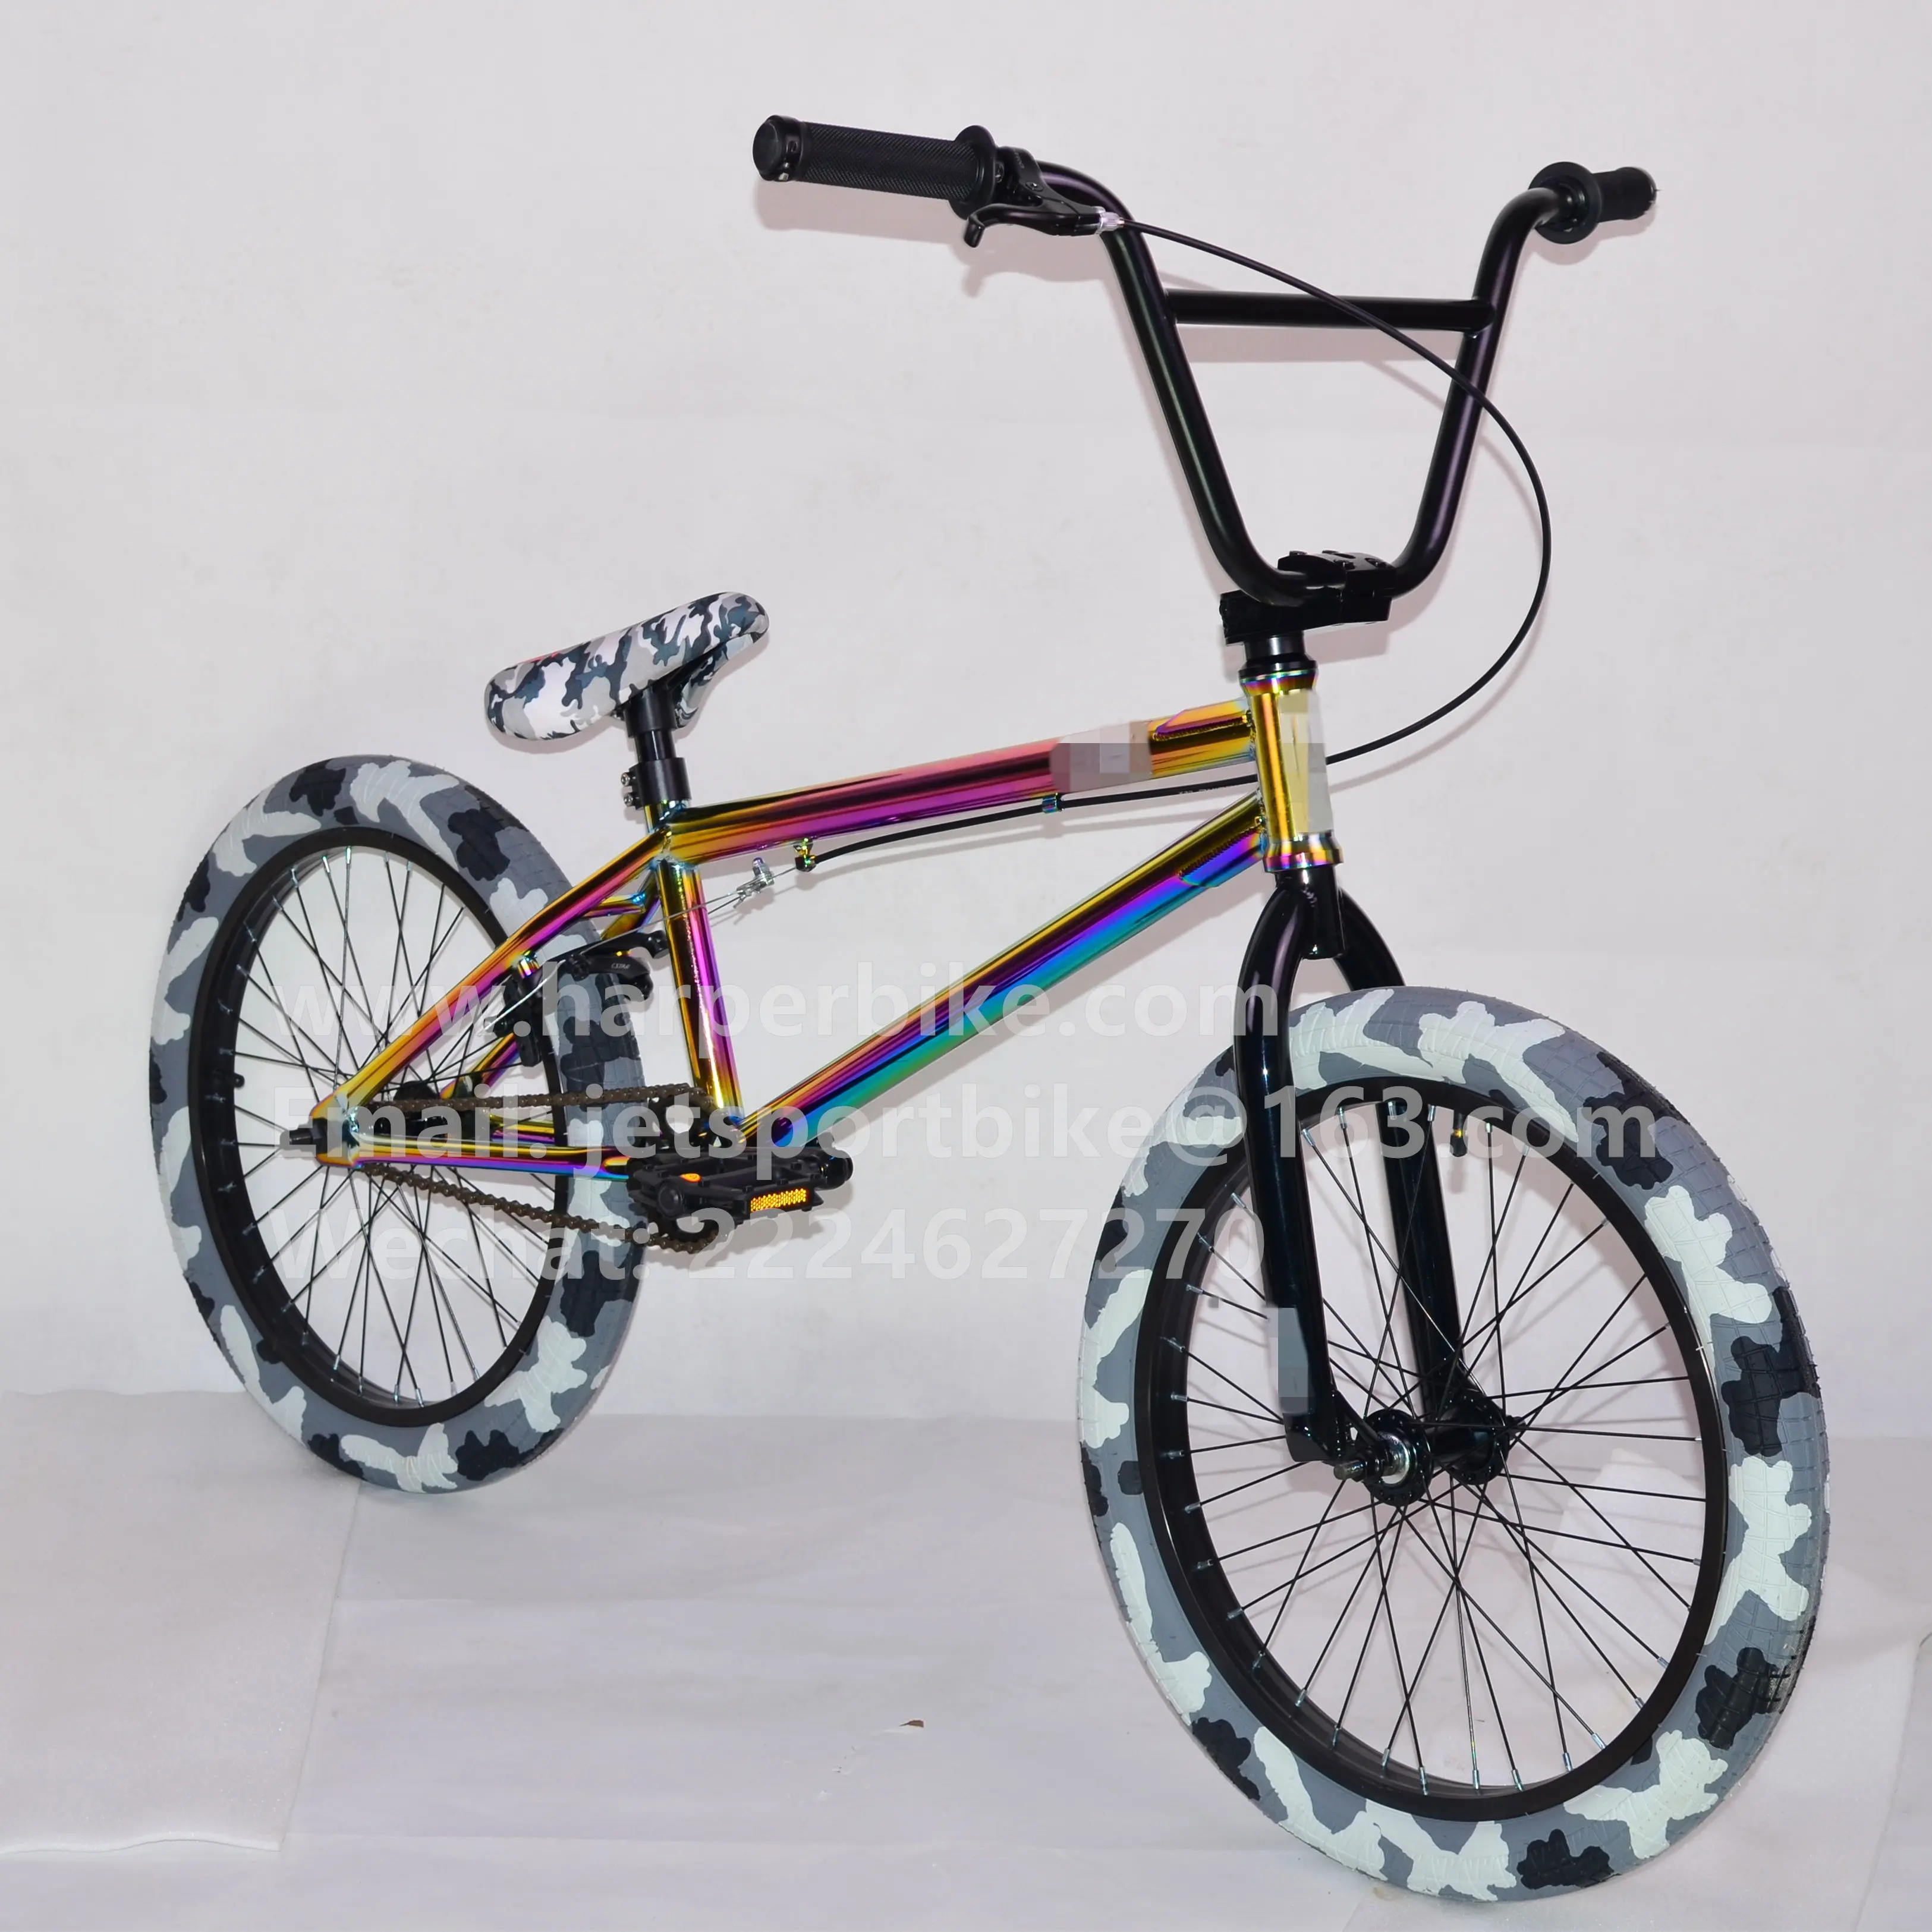 Desain Asli Oillick Bmx 20 "Sepeda Gaya Bebas